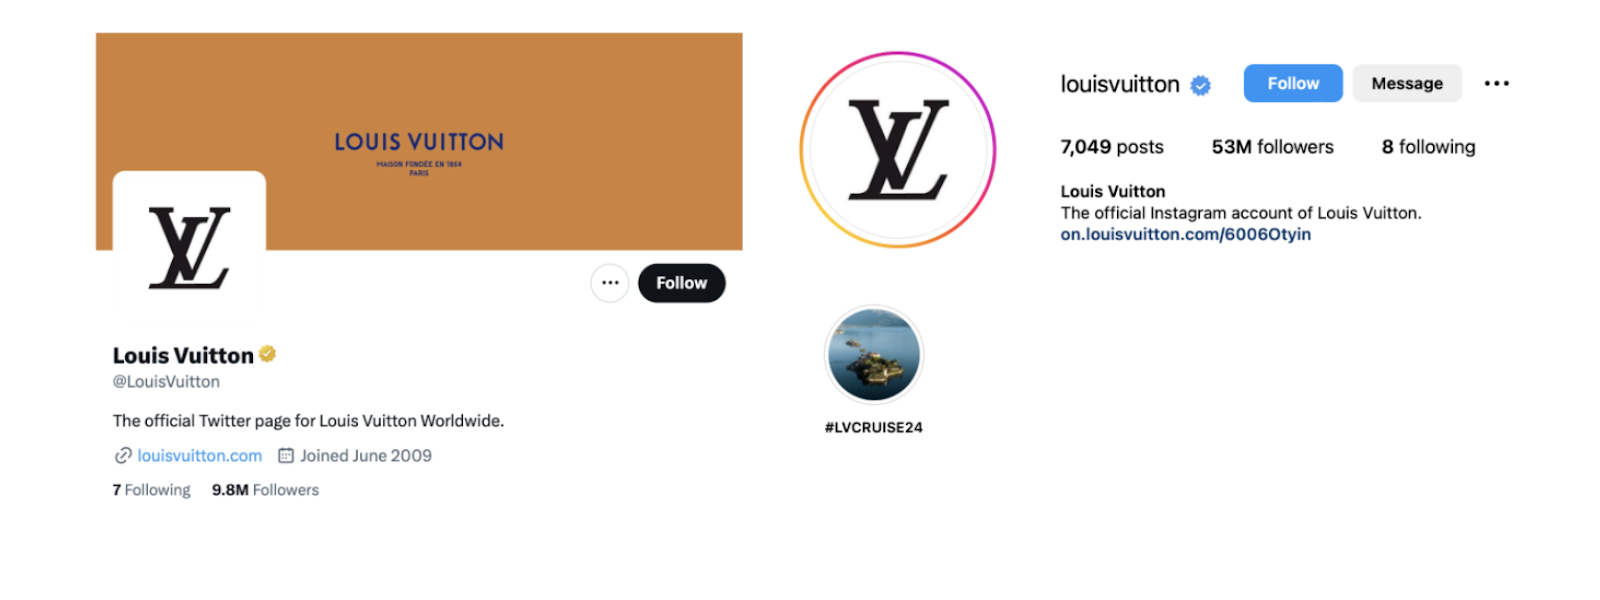 Chiến lược Social Media Marketing của Louis Vuitton